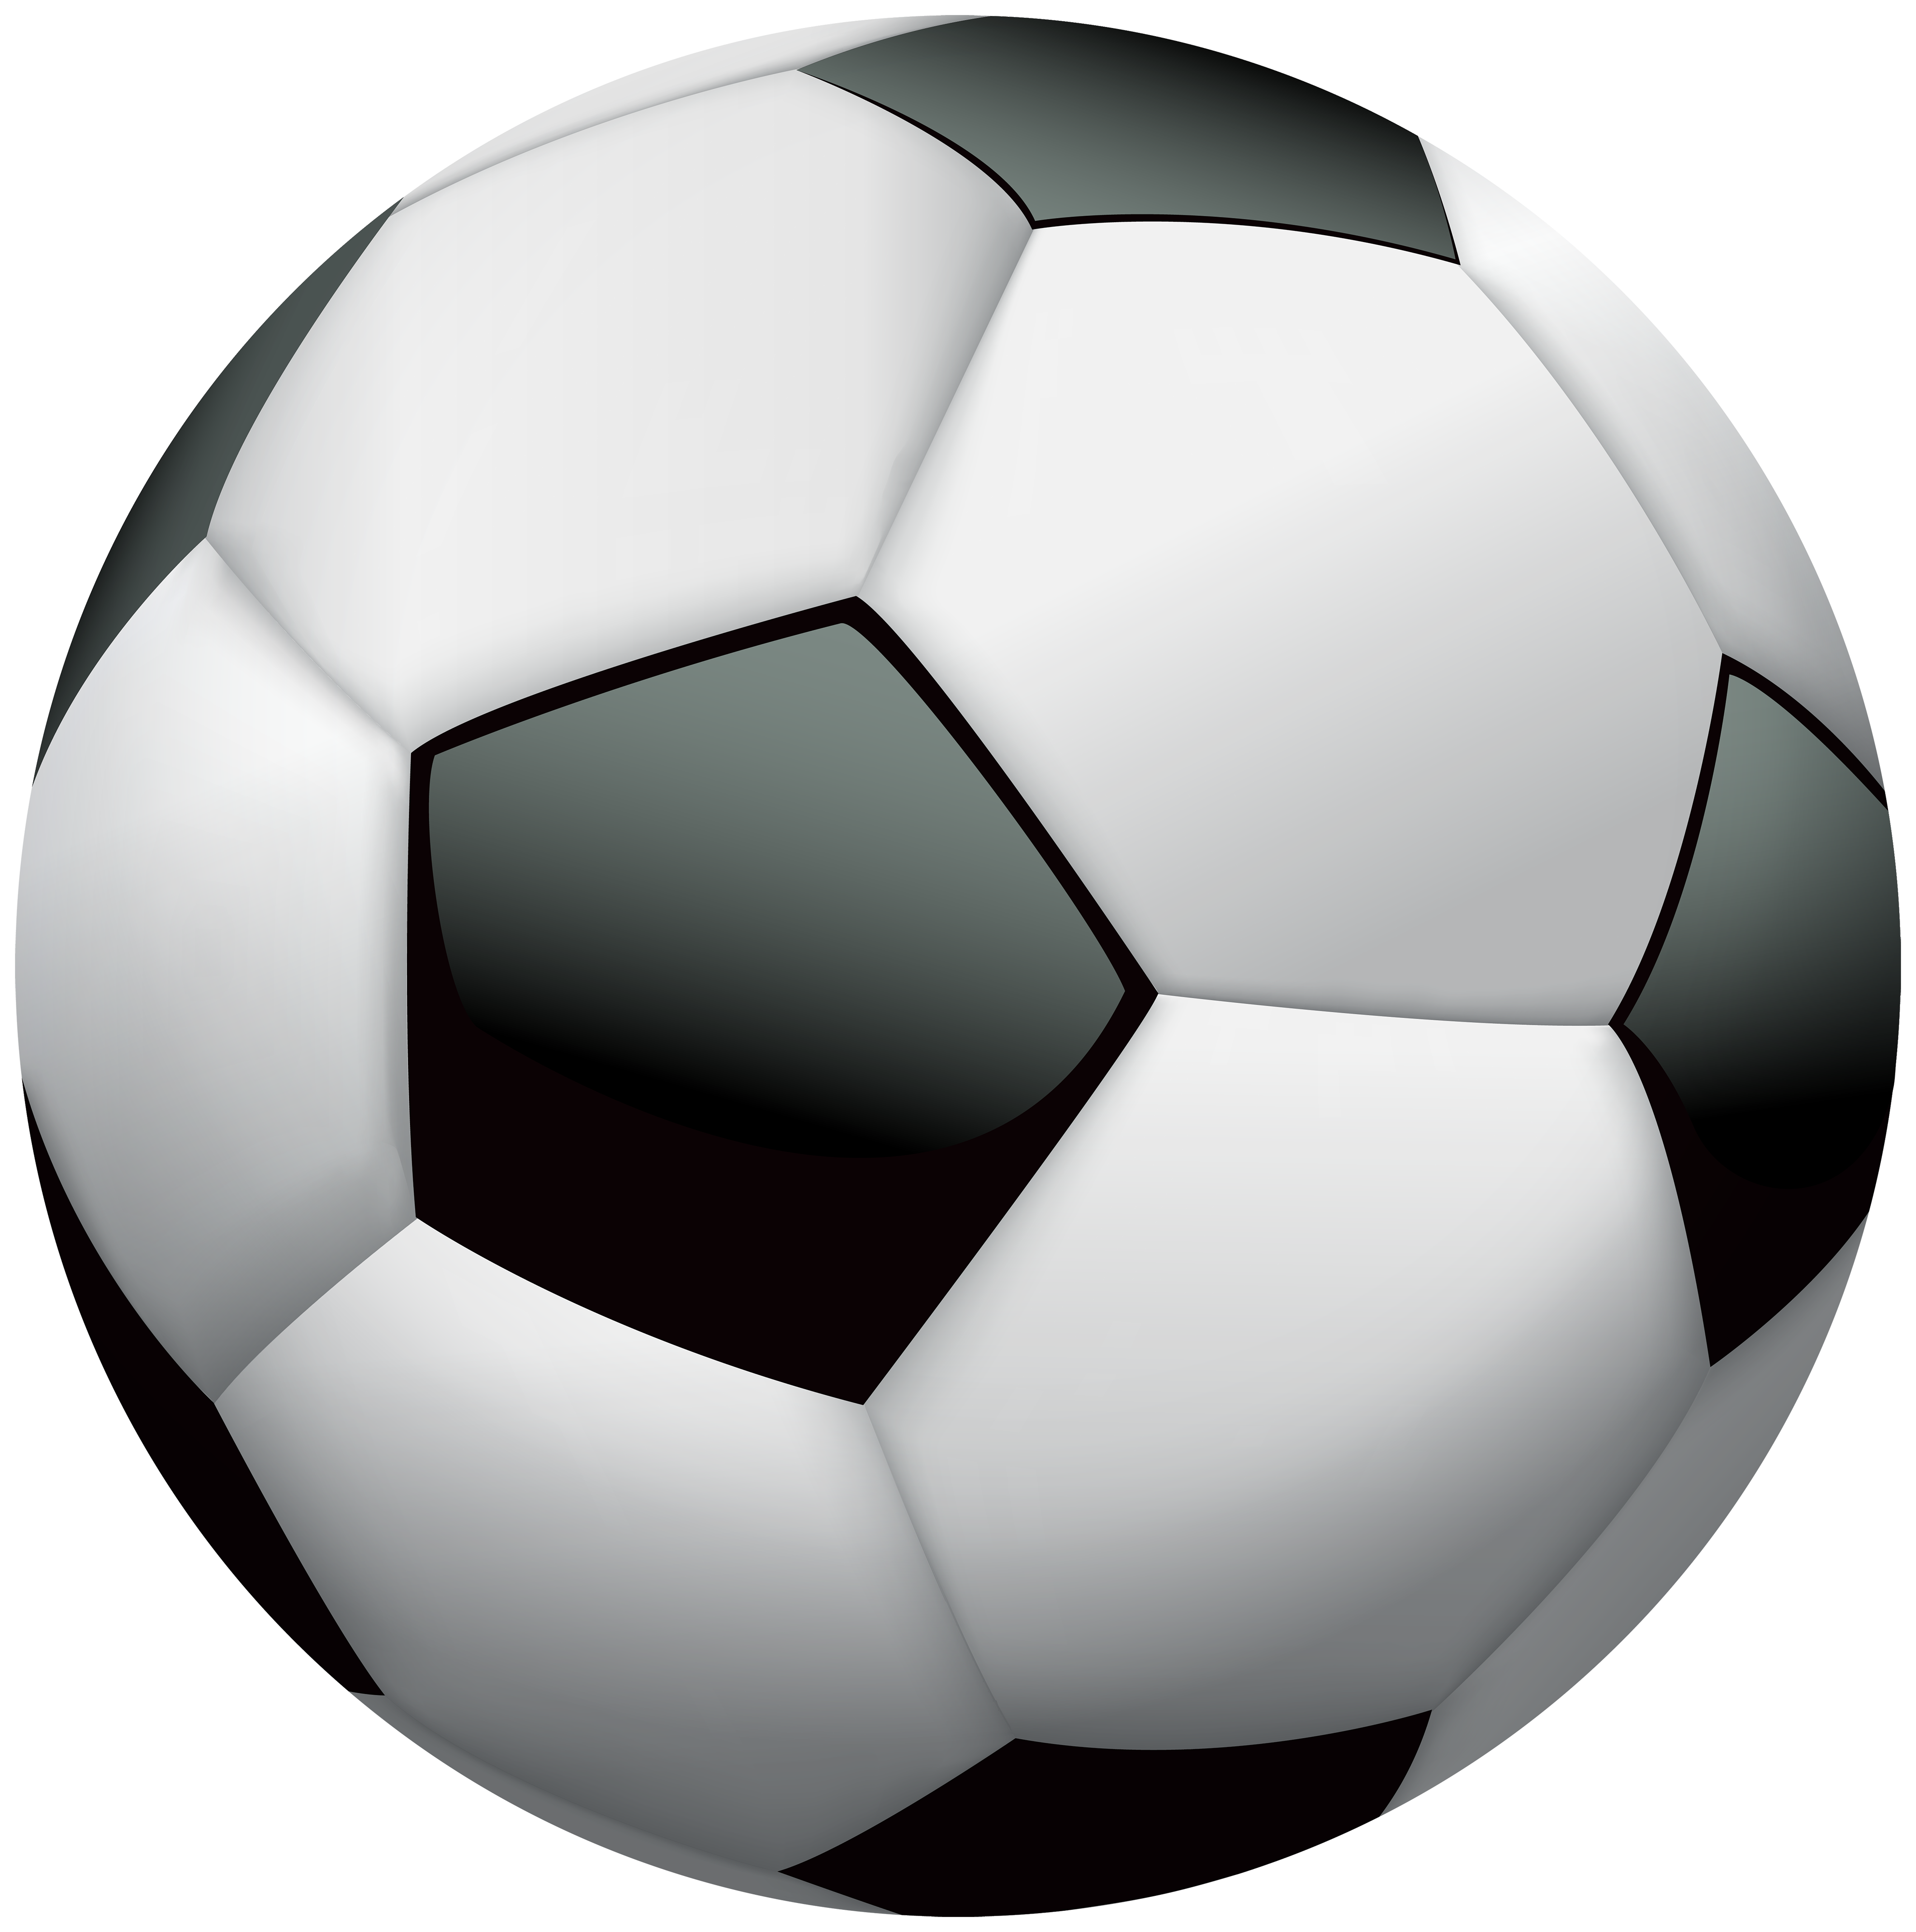 Soccer ball soccer clip art pictures image clipartix